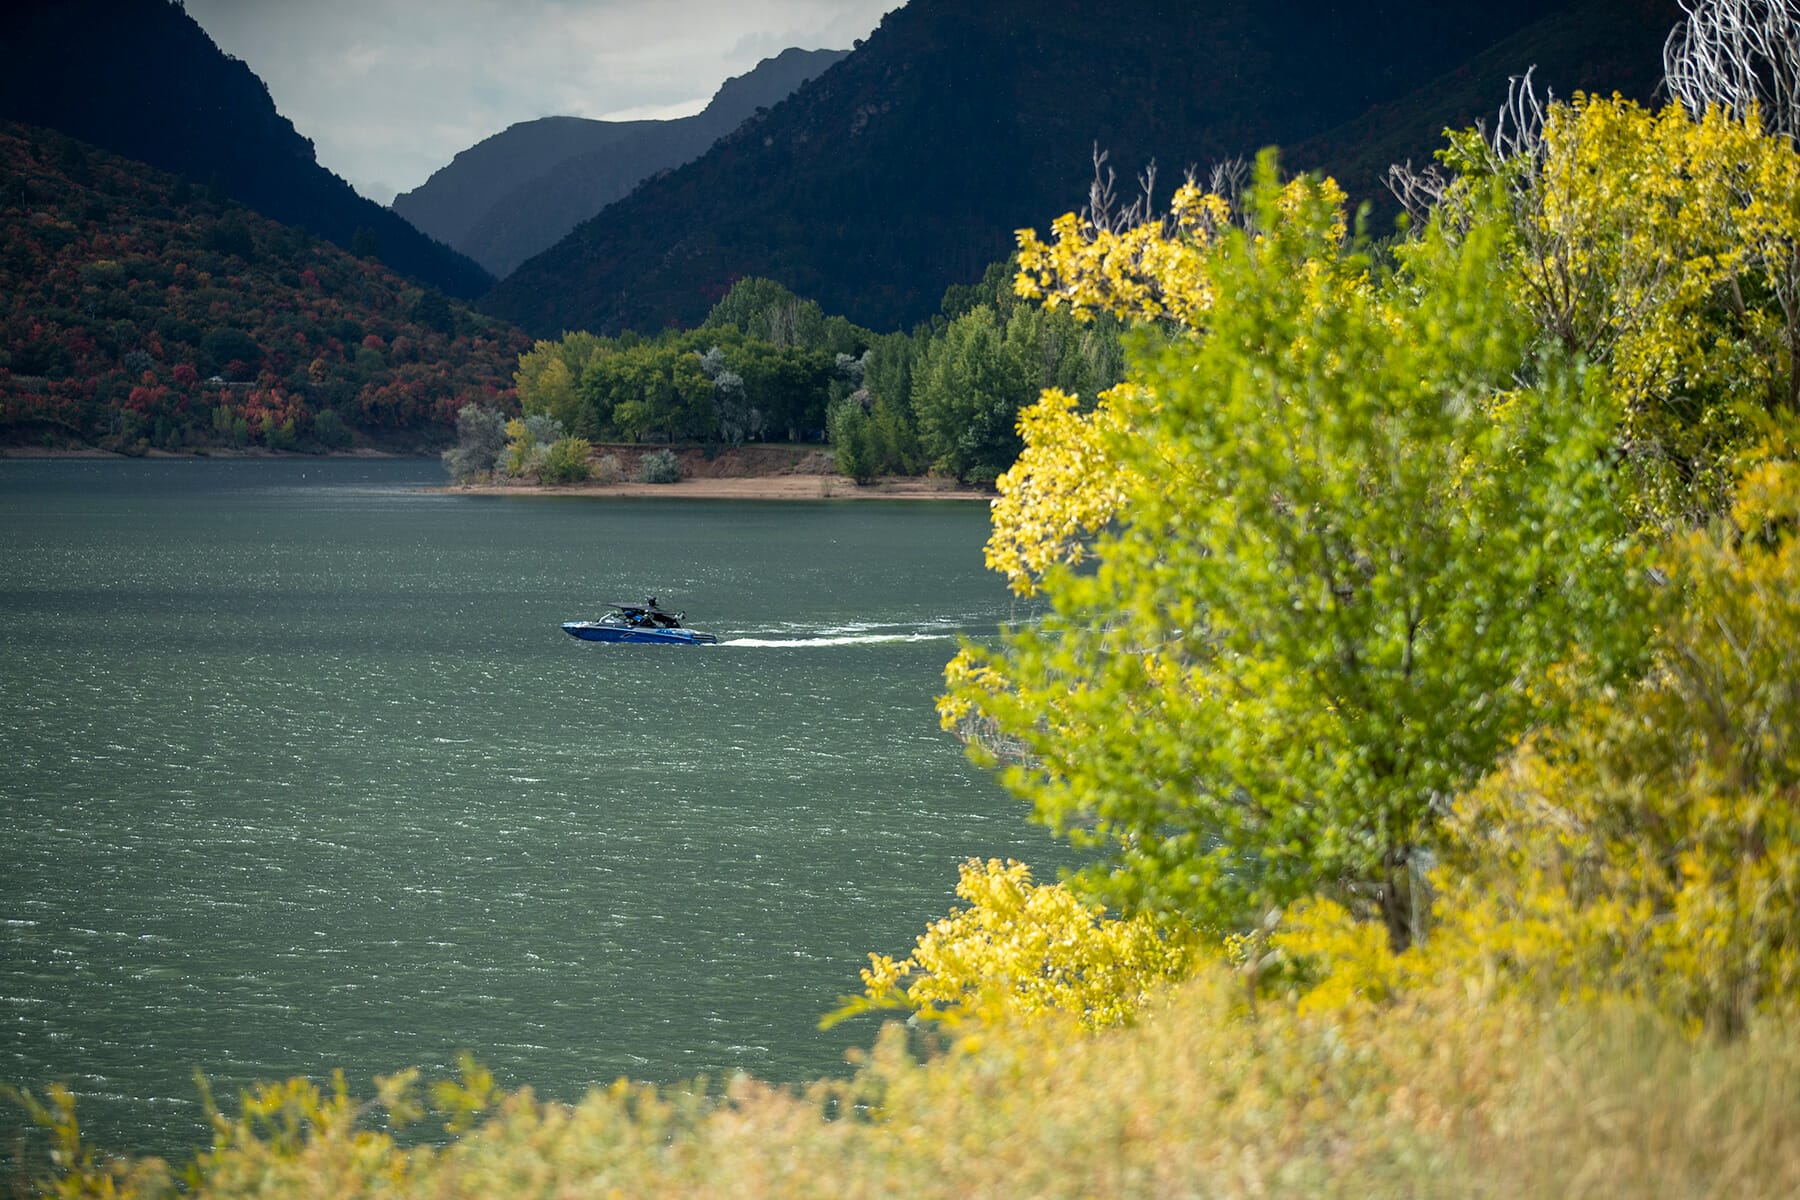 A boat on a lake near a mountain.